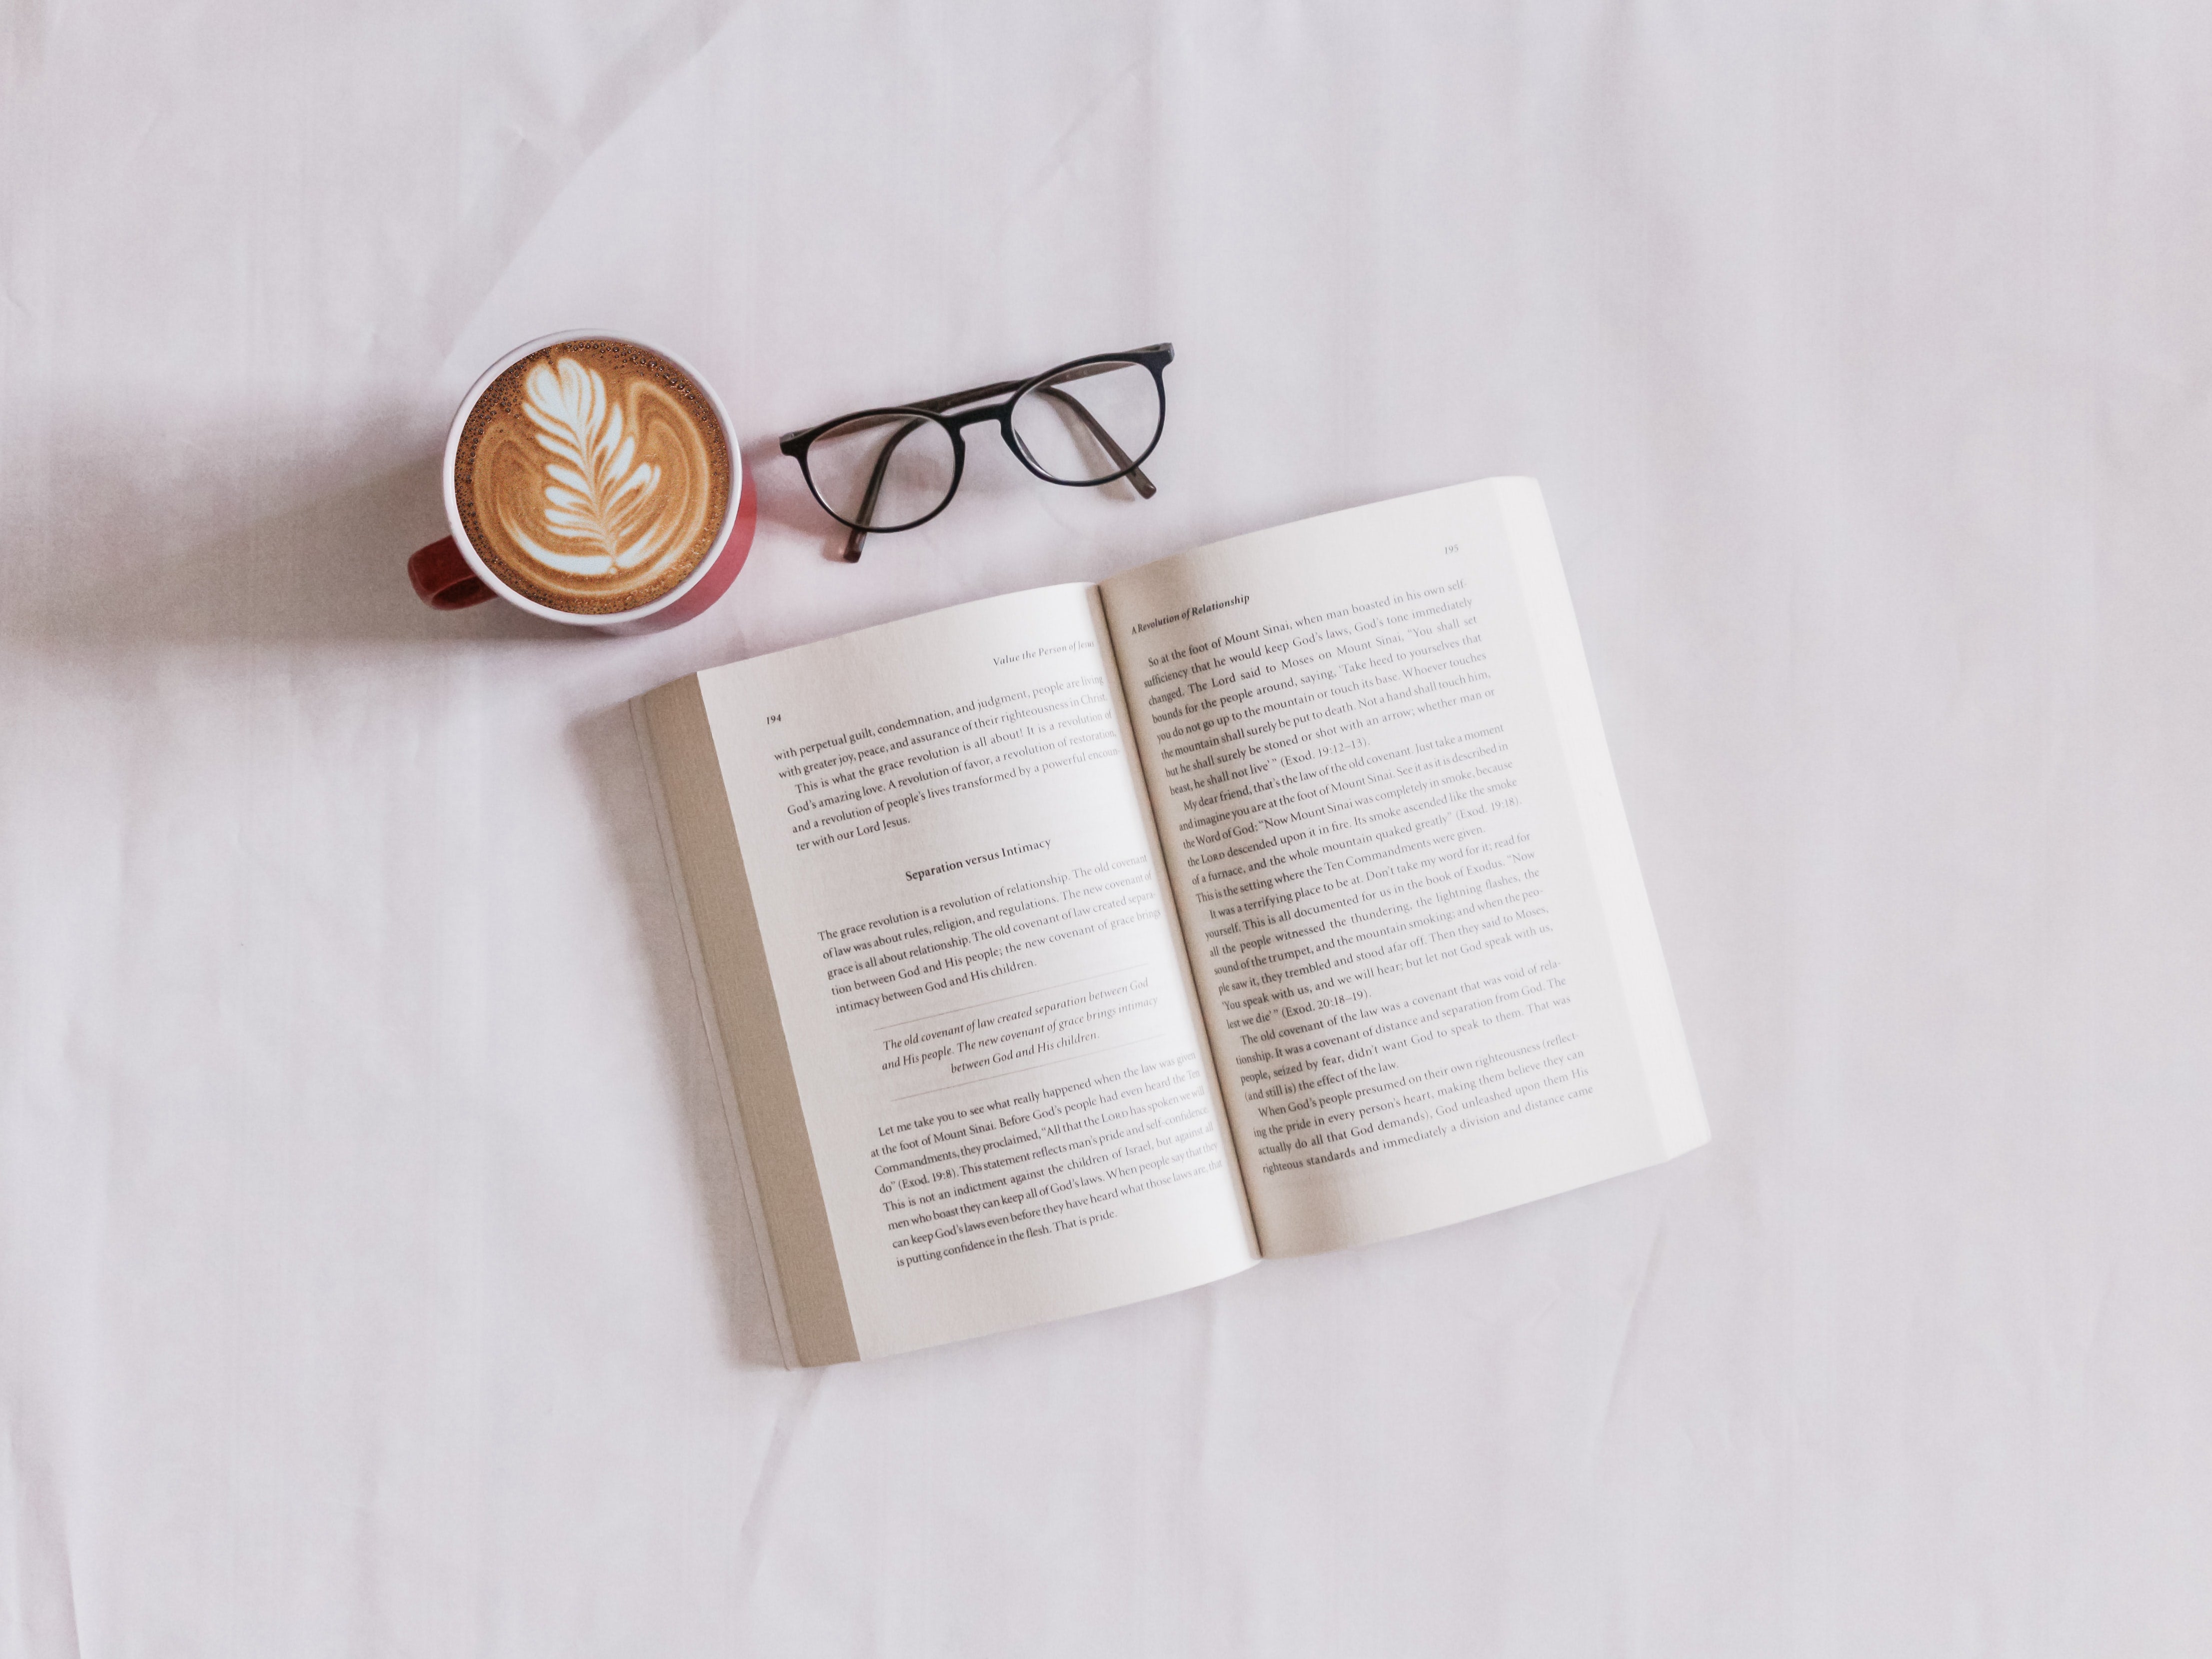 Book, coffee mug, and glasses lie on table 